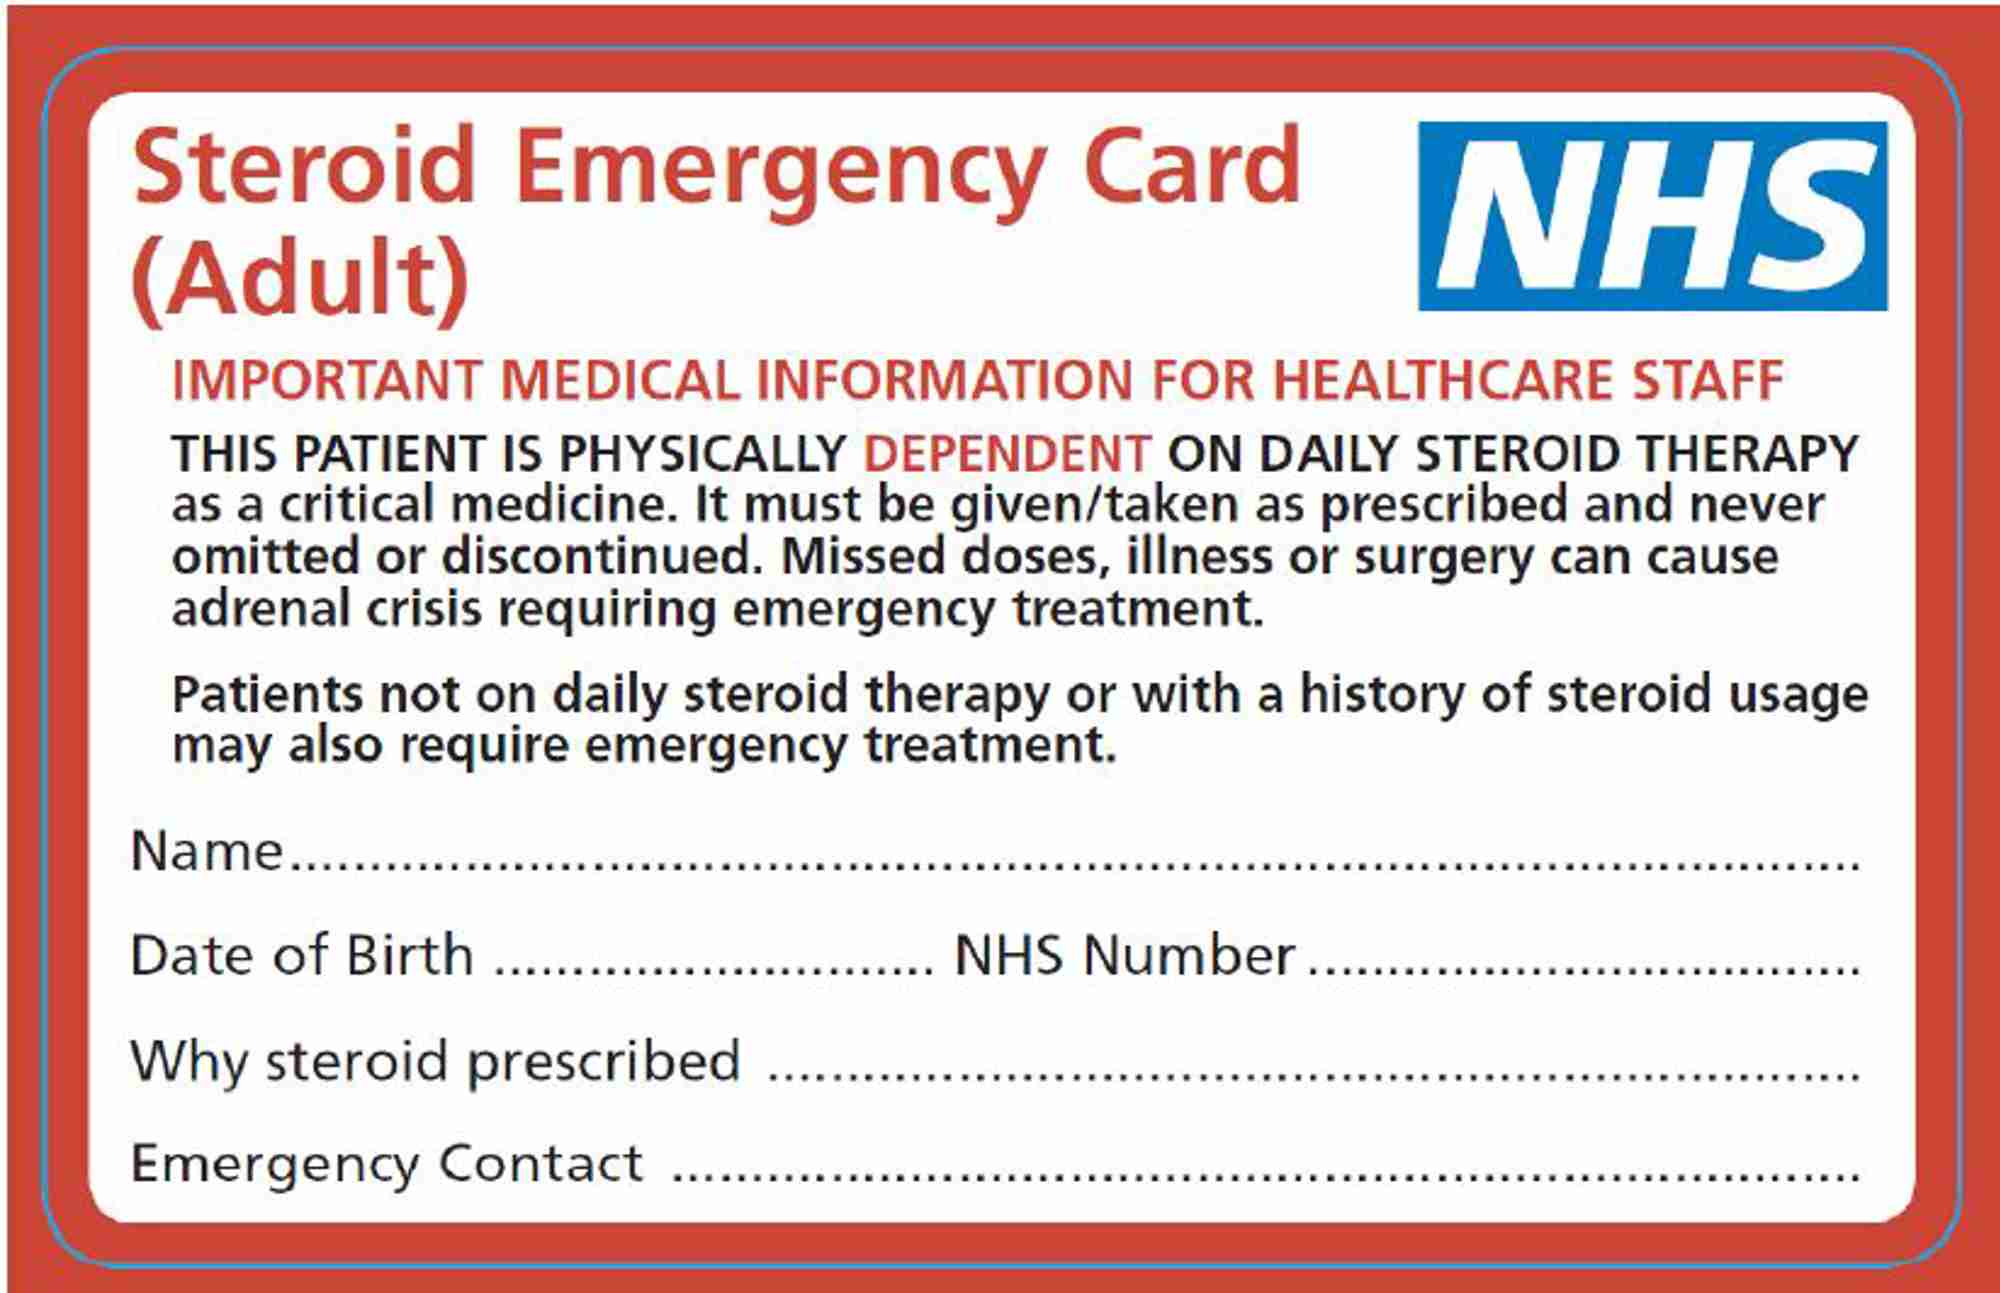 NHS steroid card front.JPG